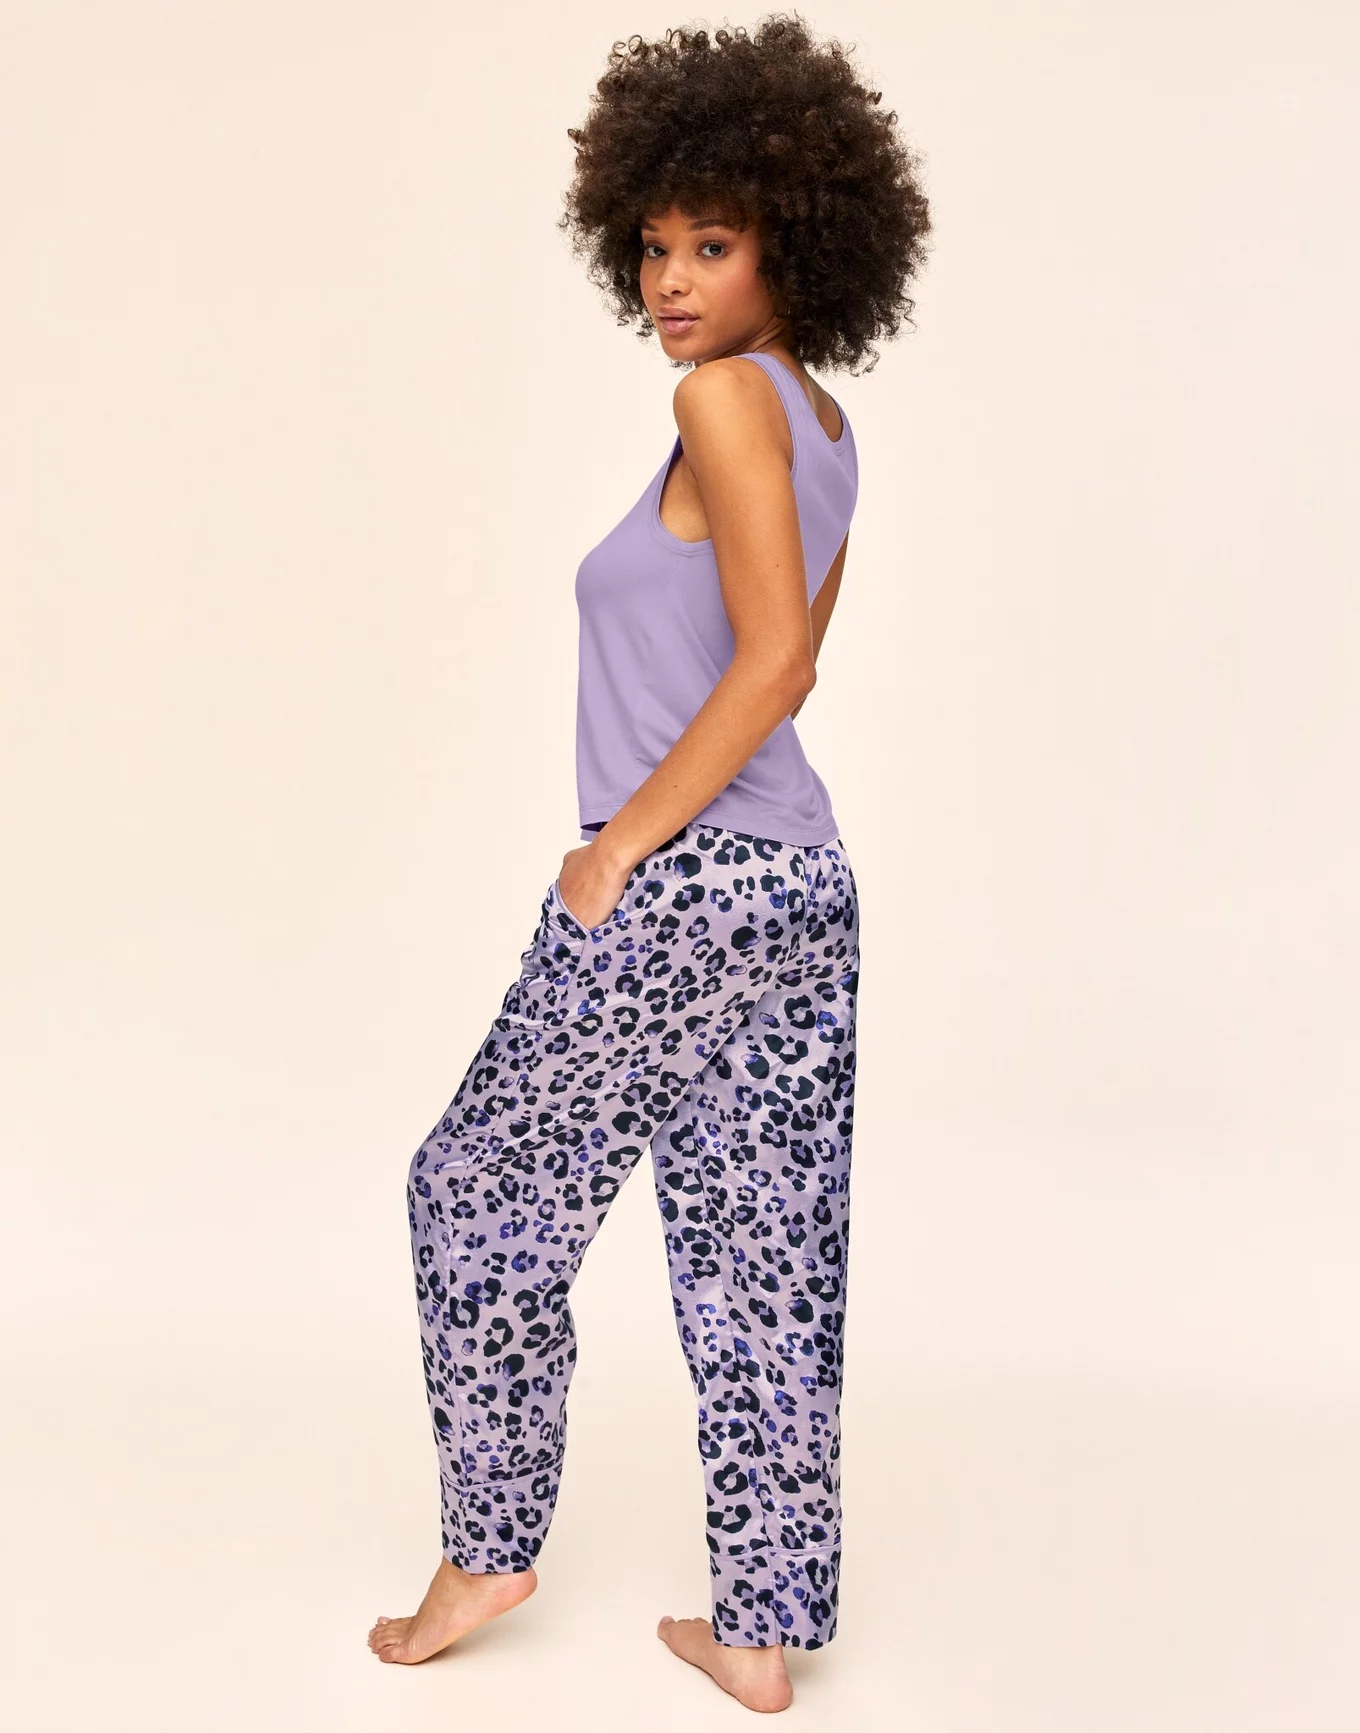 GAIAM Yoga Pants Tank Top Set PJs Pajamas Lavender Lace XL/SM